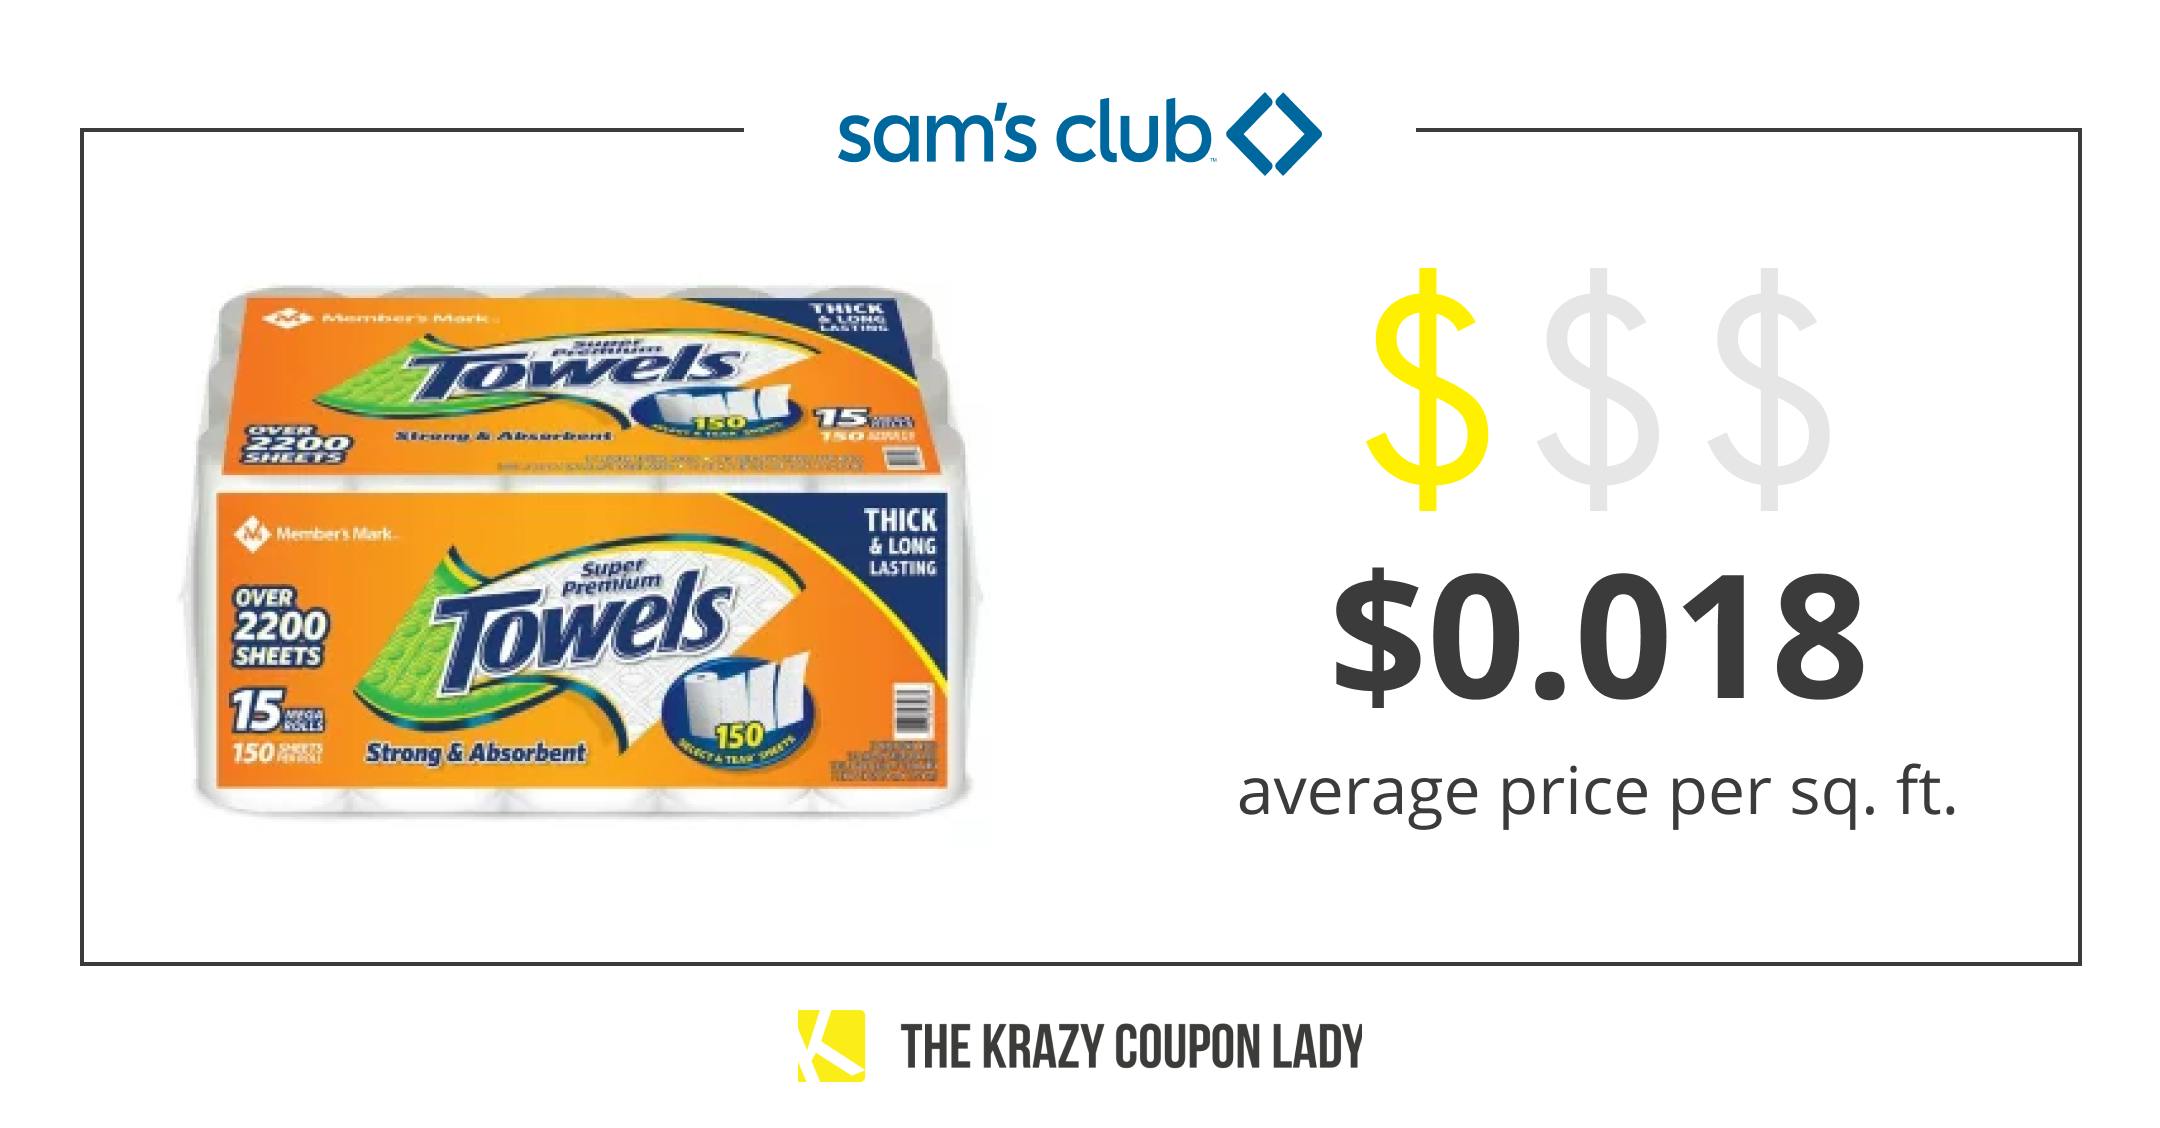 sams club paper towels average price per square foot graphic